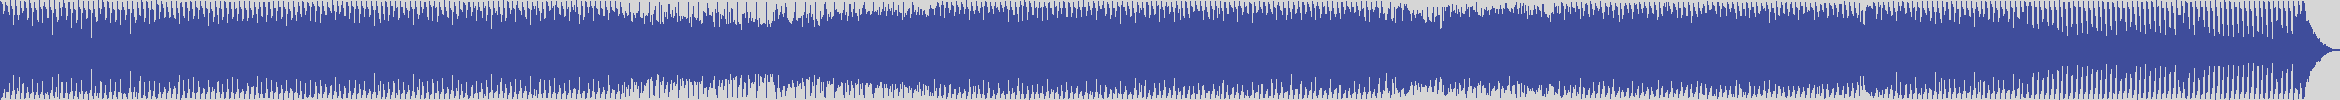 atomic_recordings [AR017] Alex One - Space [Original Mix] audio wave form